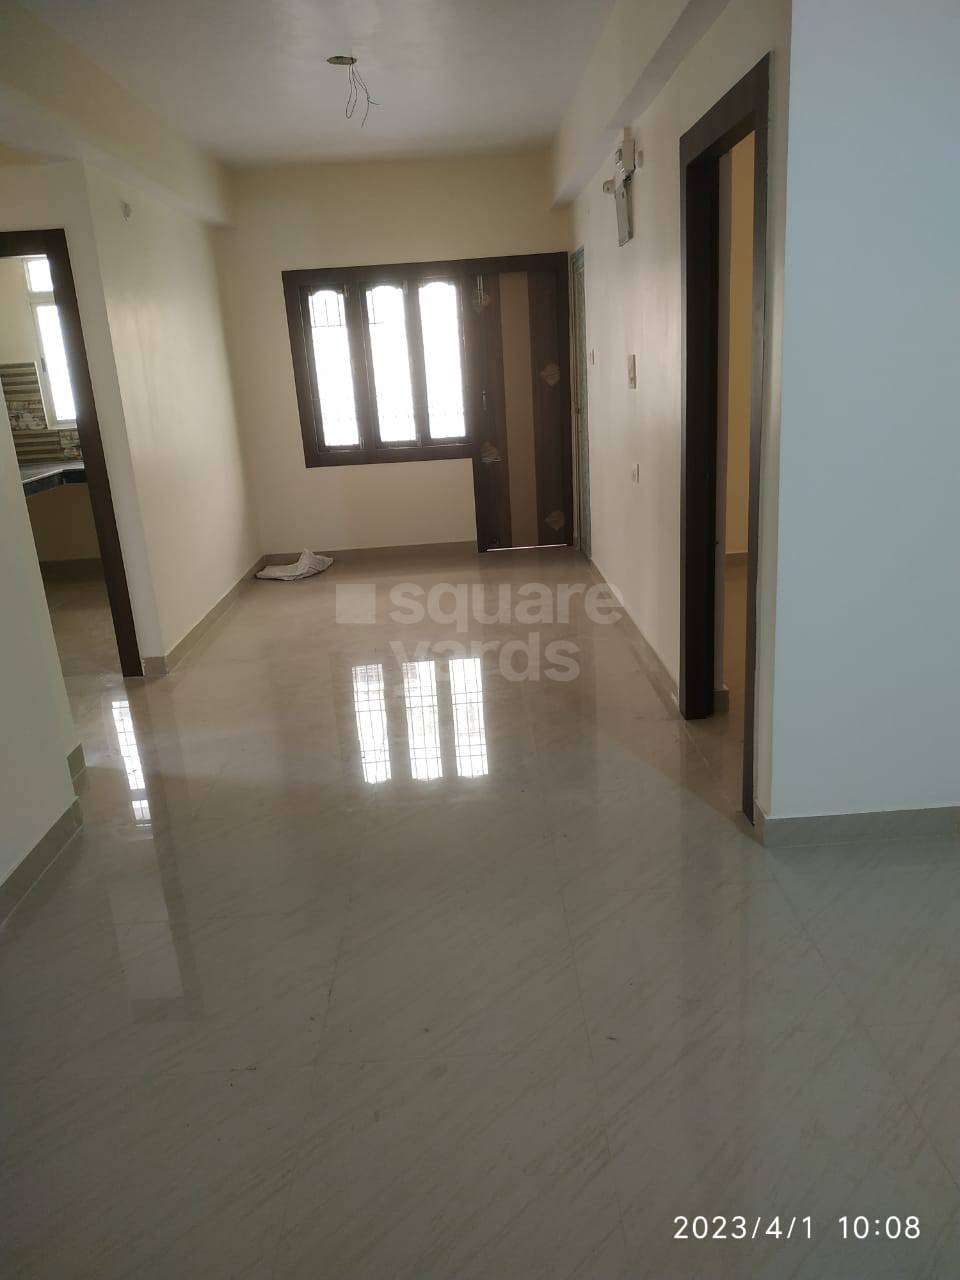 Resale 3 Bedroom 1261 Sq.Ft. Apartment in Jagdeo Path Patna - 5284306